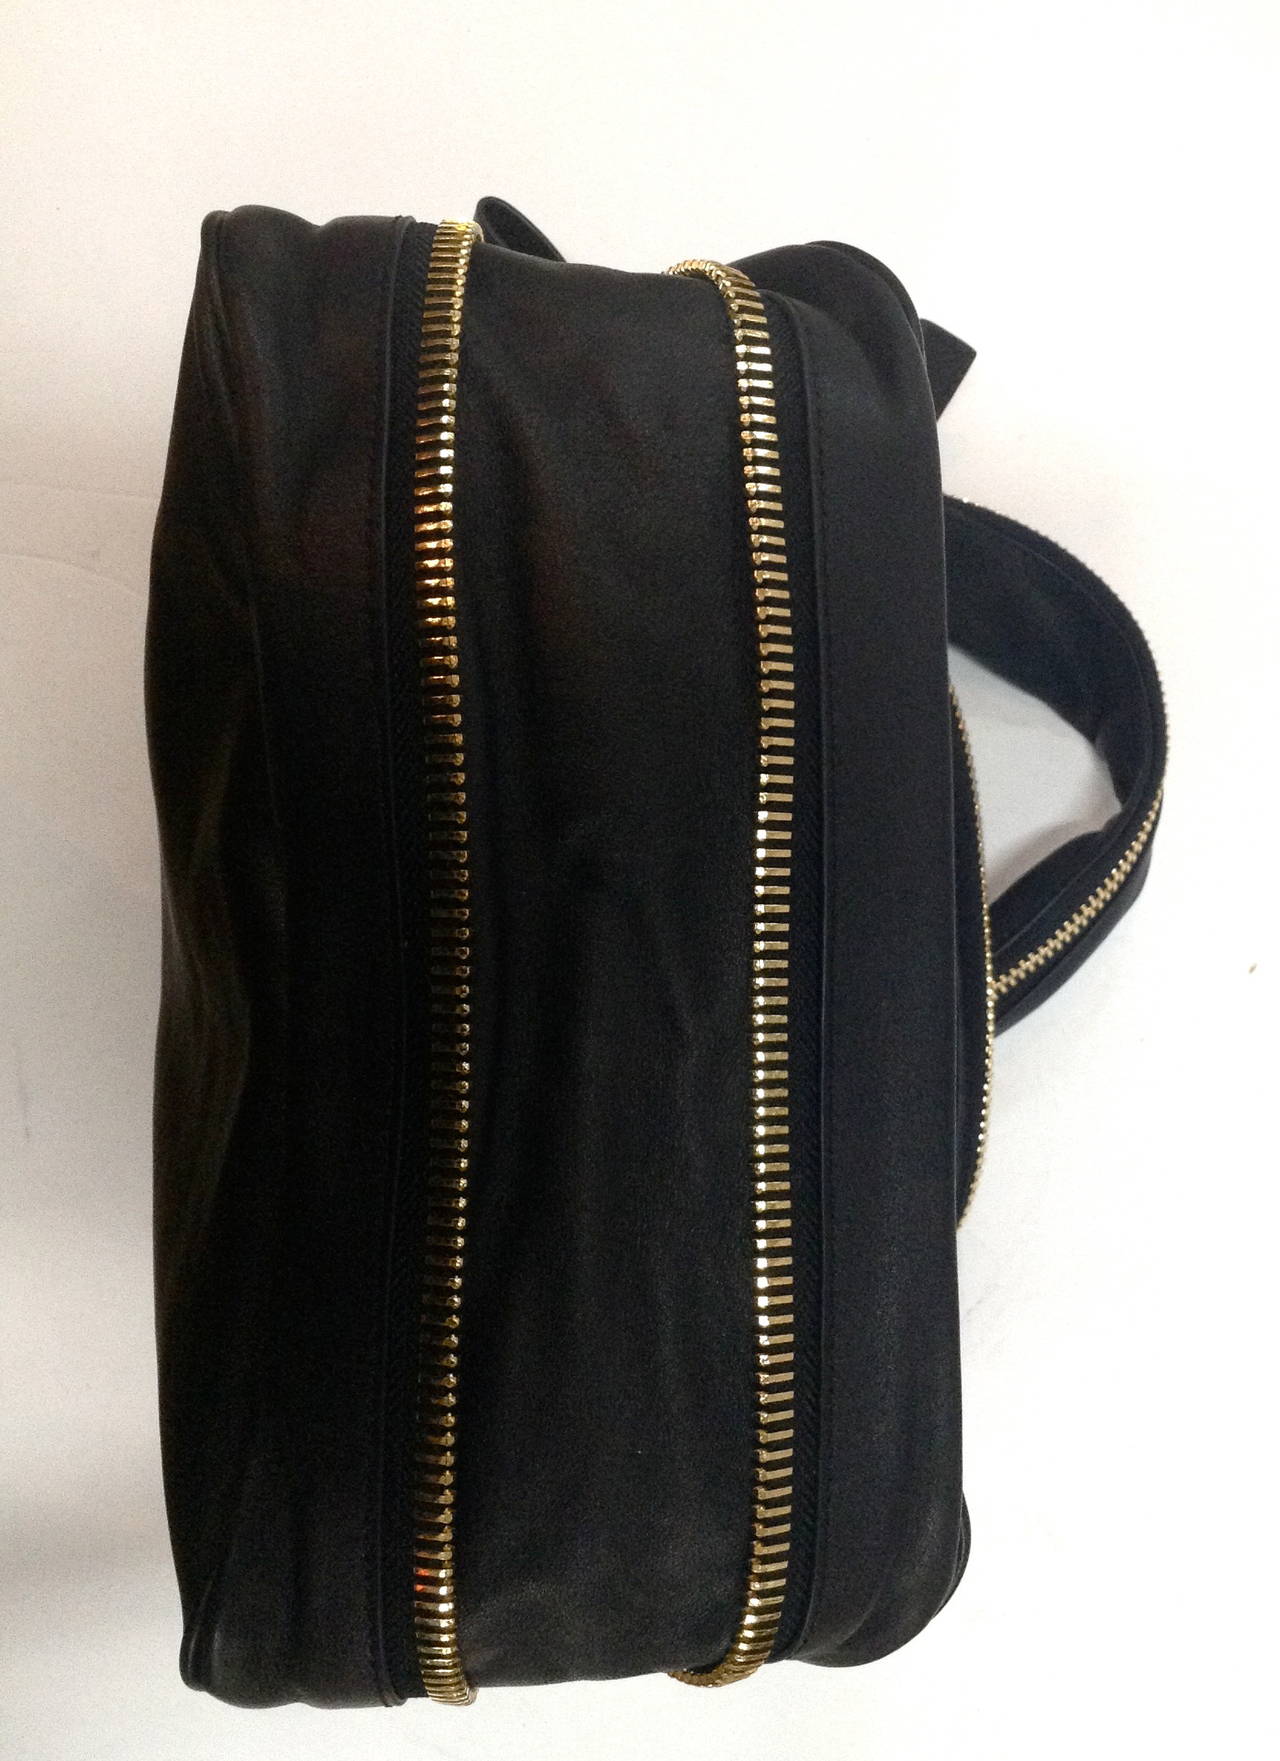 2013 Tom Ford Jennifer Leather Shoulder Bag Retail $3200 In Excellent Condition For Sale In Westmount, Quebec